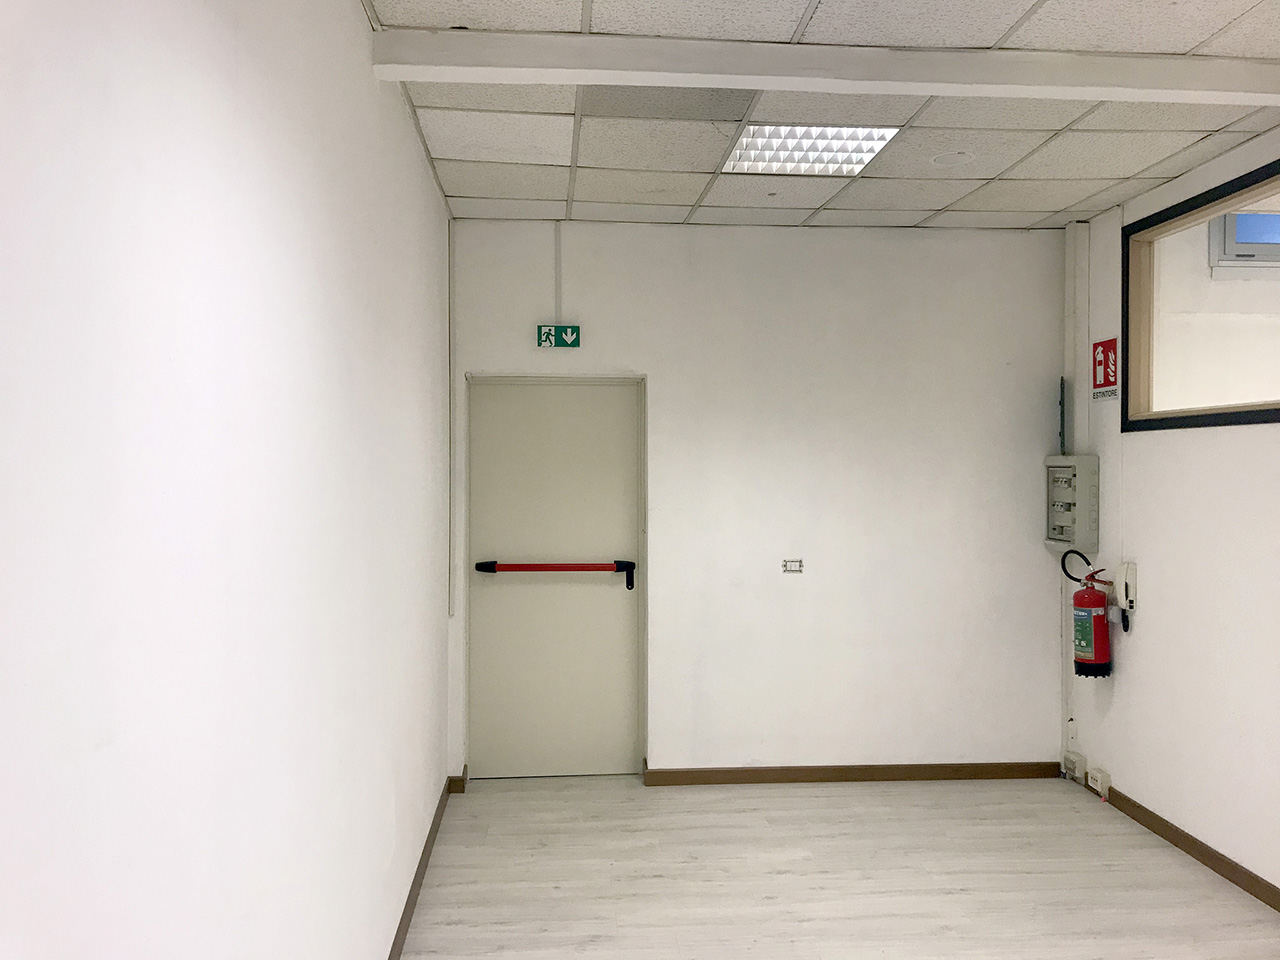 Space 1 - Warehouse to rent in Milan - 100 sqm (1076 sqft) - via Fantoli, Mecenate area